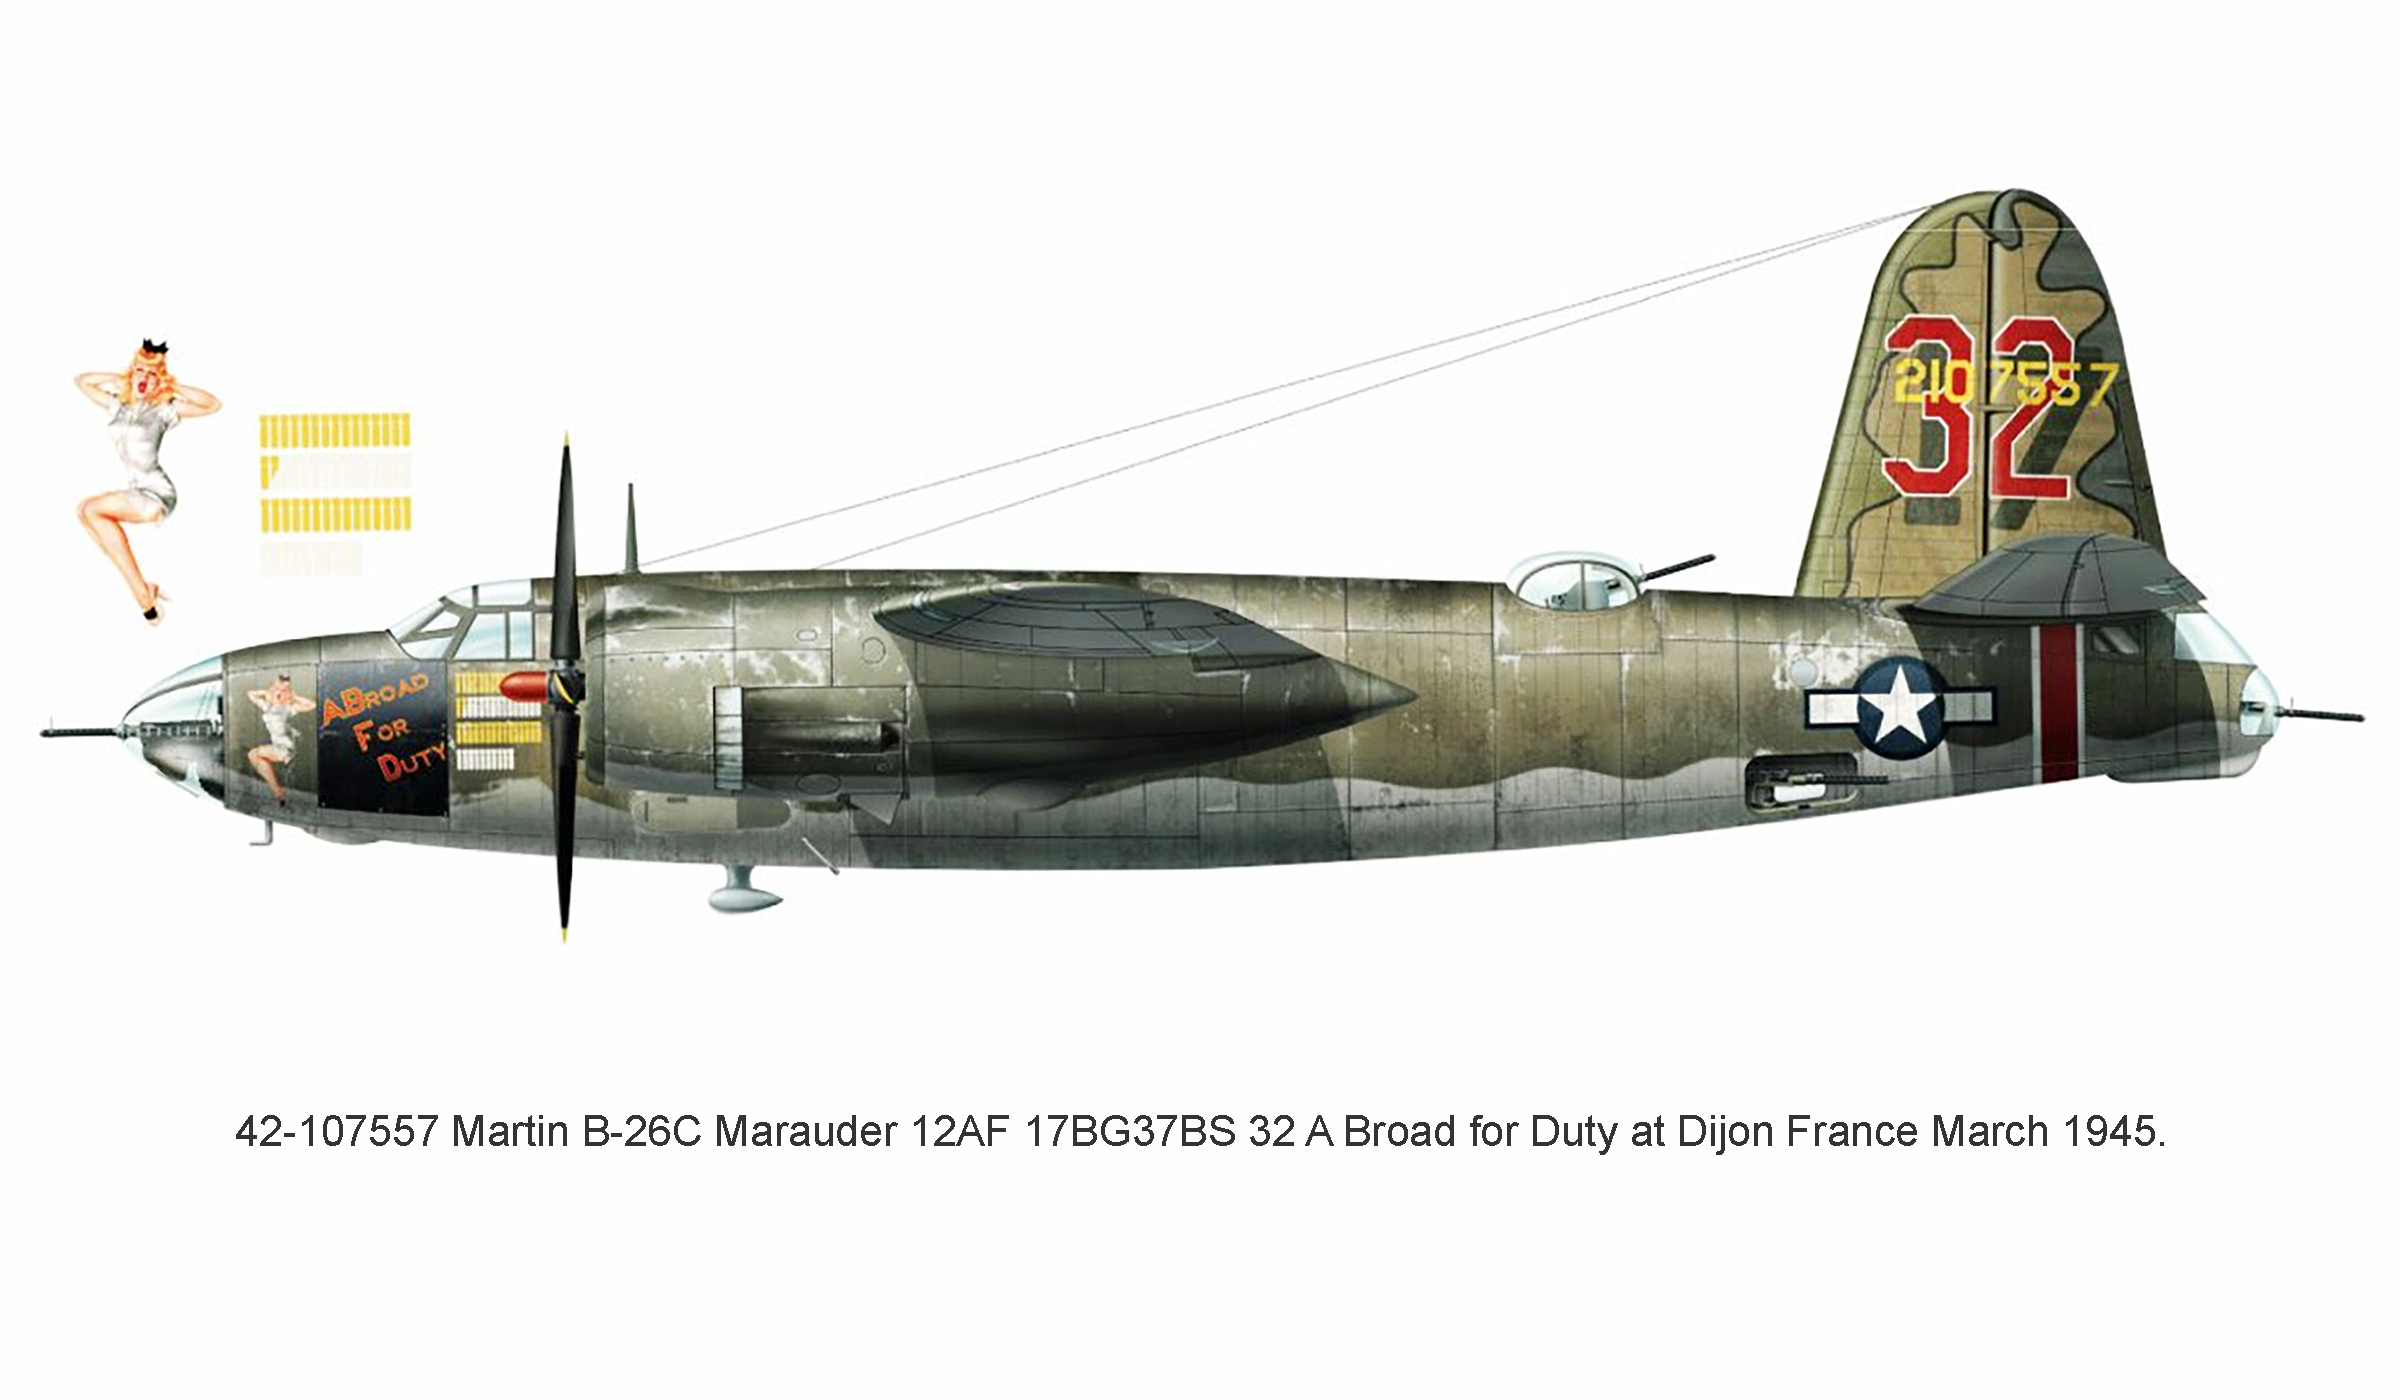 42 107557 B 26C Marauder 12AF 17BG37BS 32 A Broad for Duty at Dijon France March 1945 0A